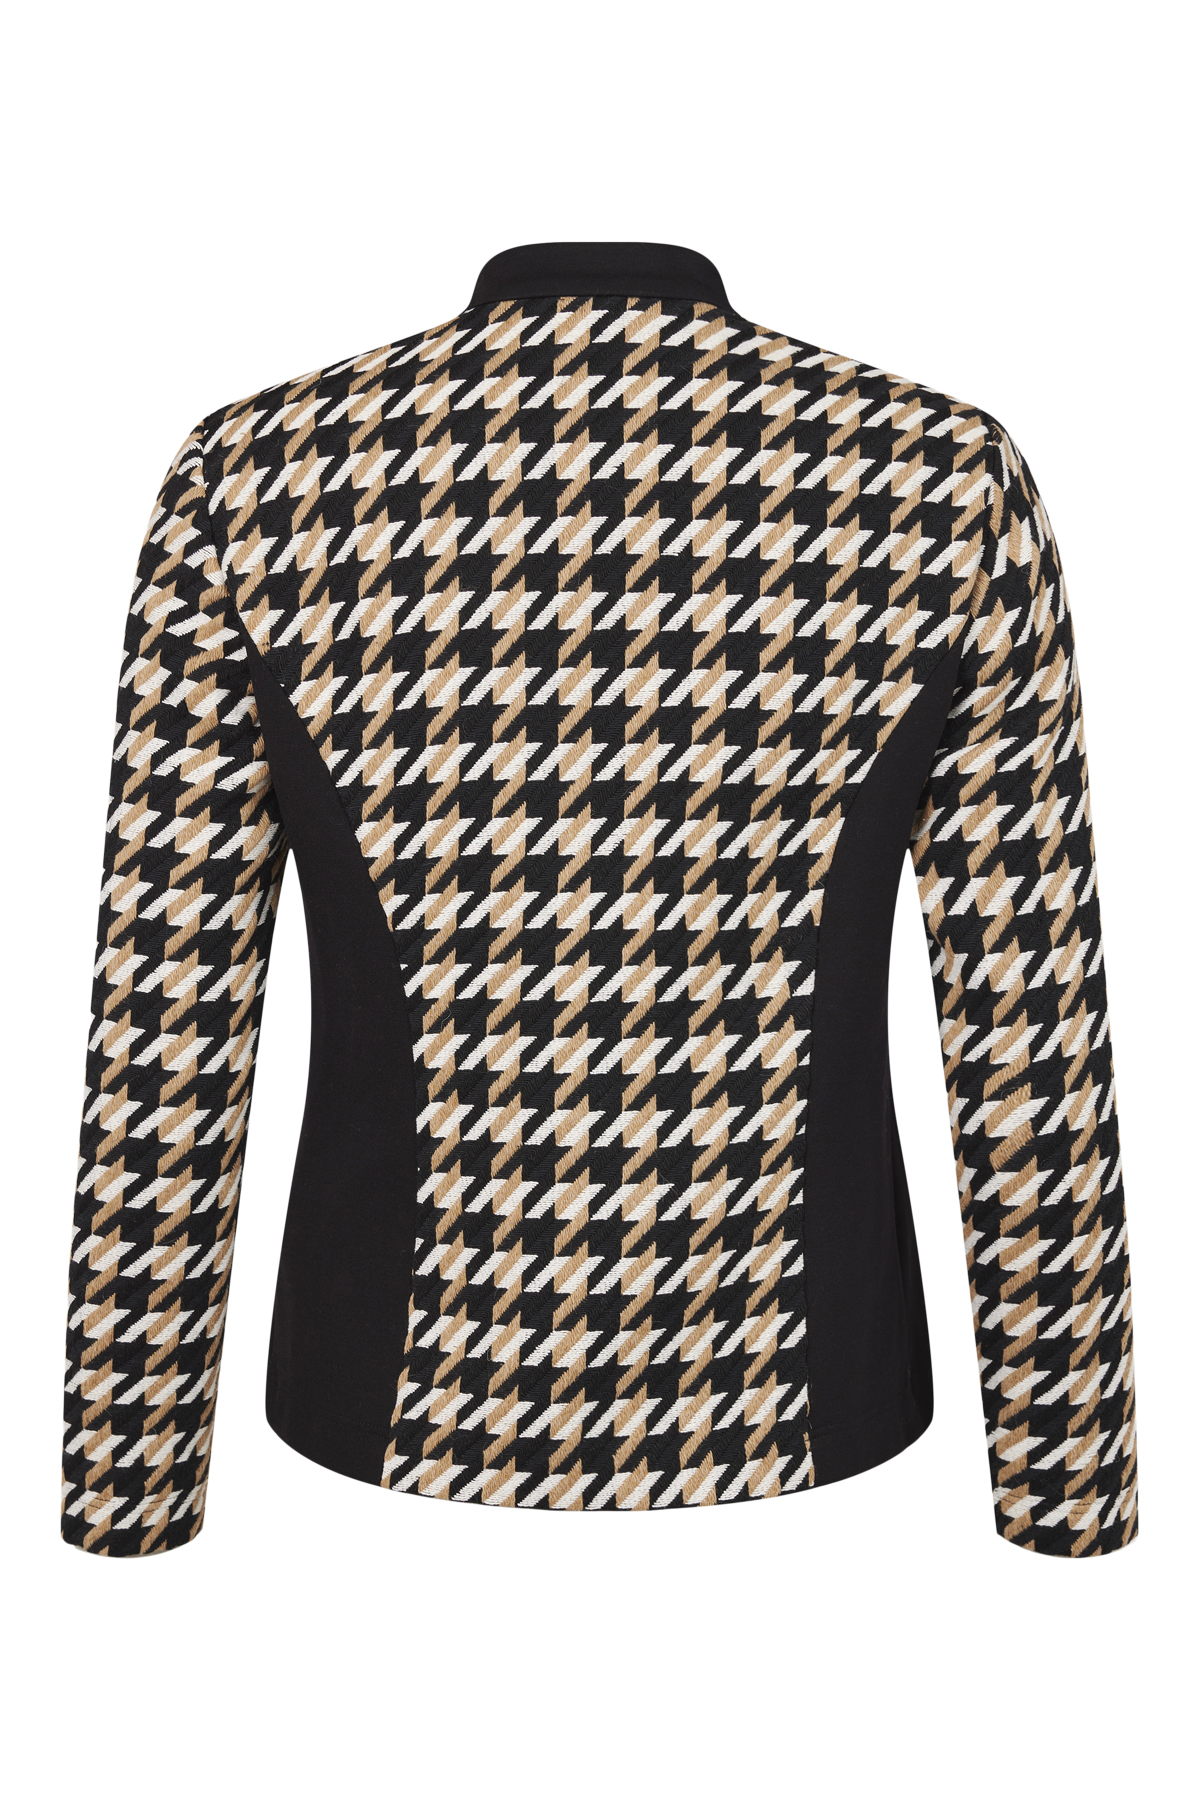 Habella 57144 Black/Beige Jacket - Gertrude Fashions